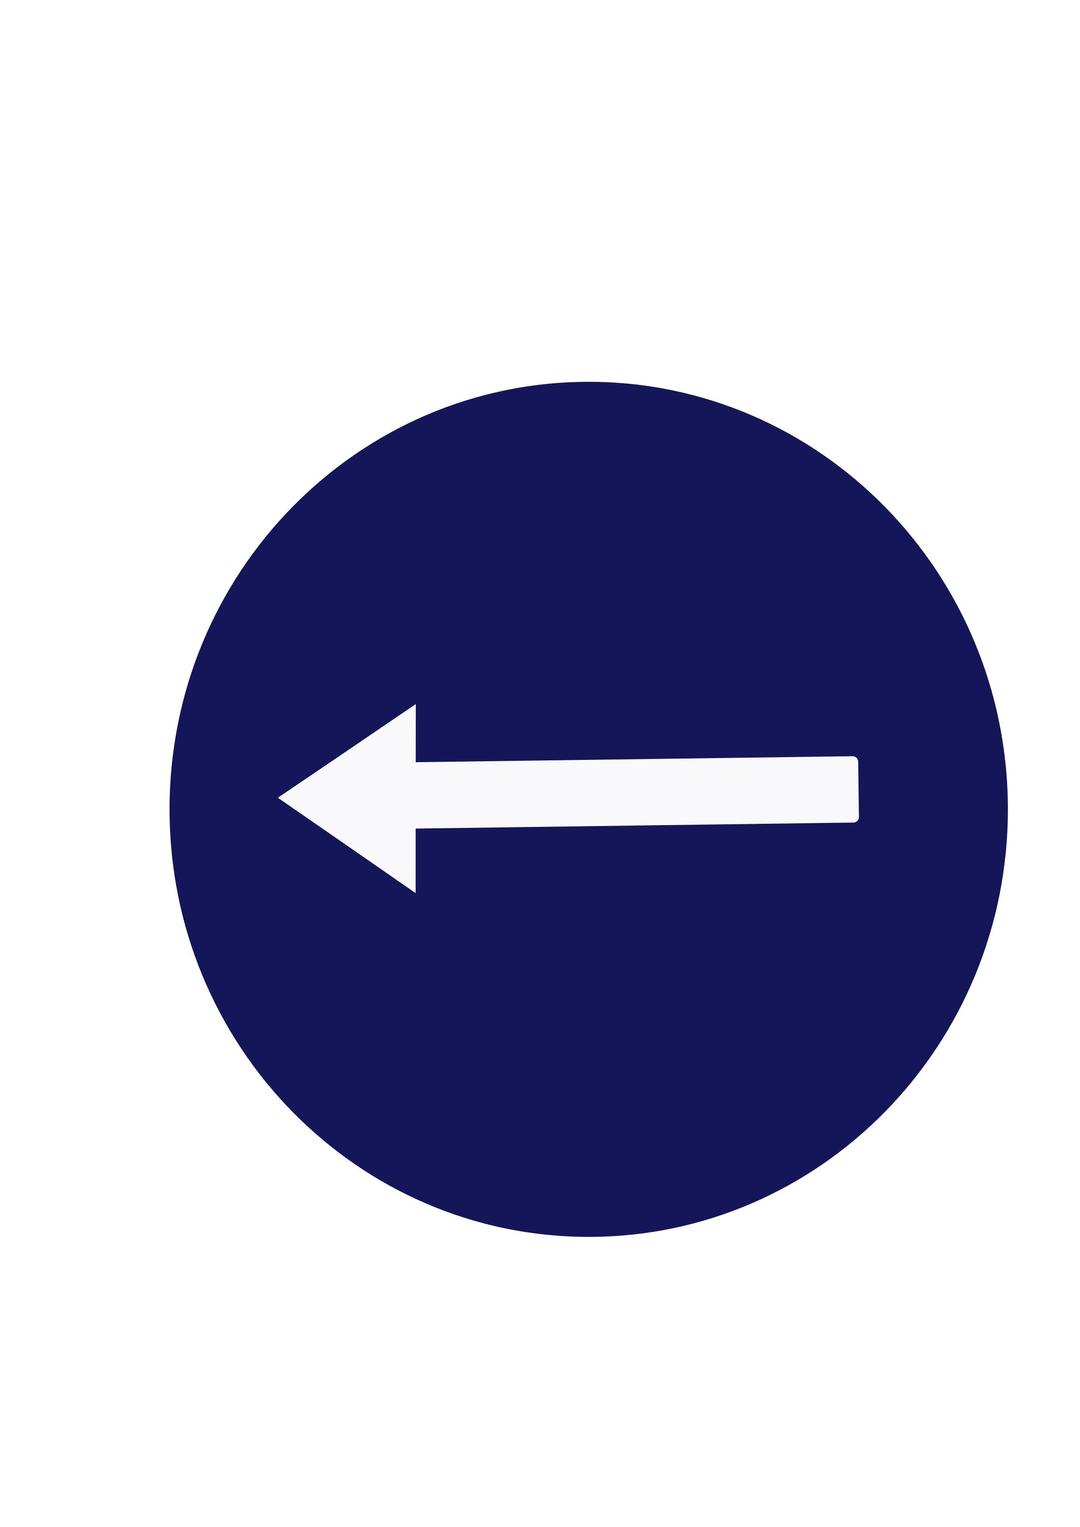 Indian road sign - Compulsory turn left png transparent